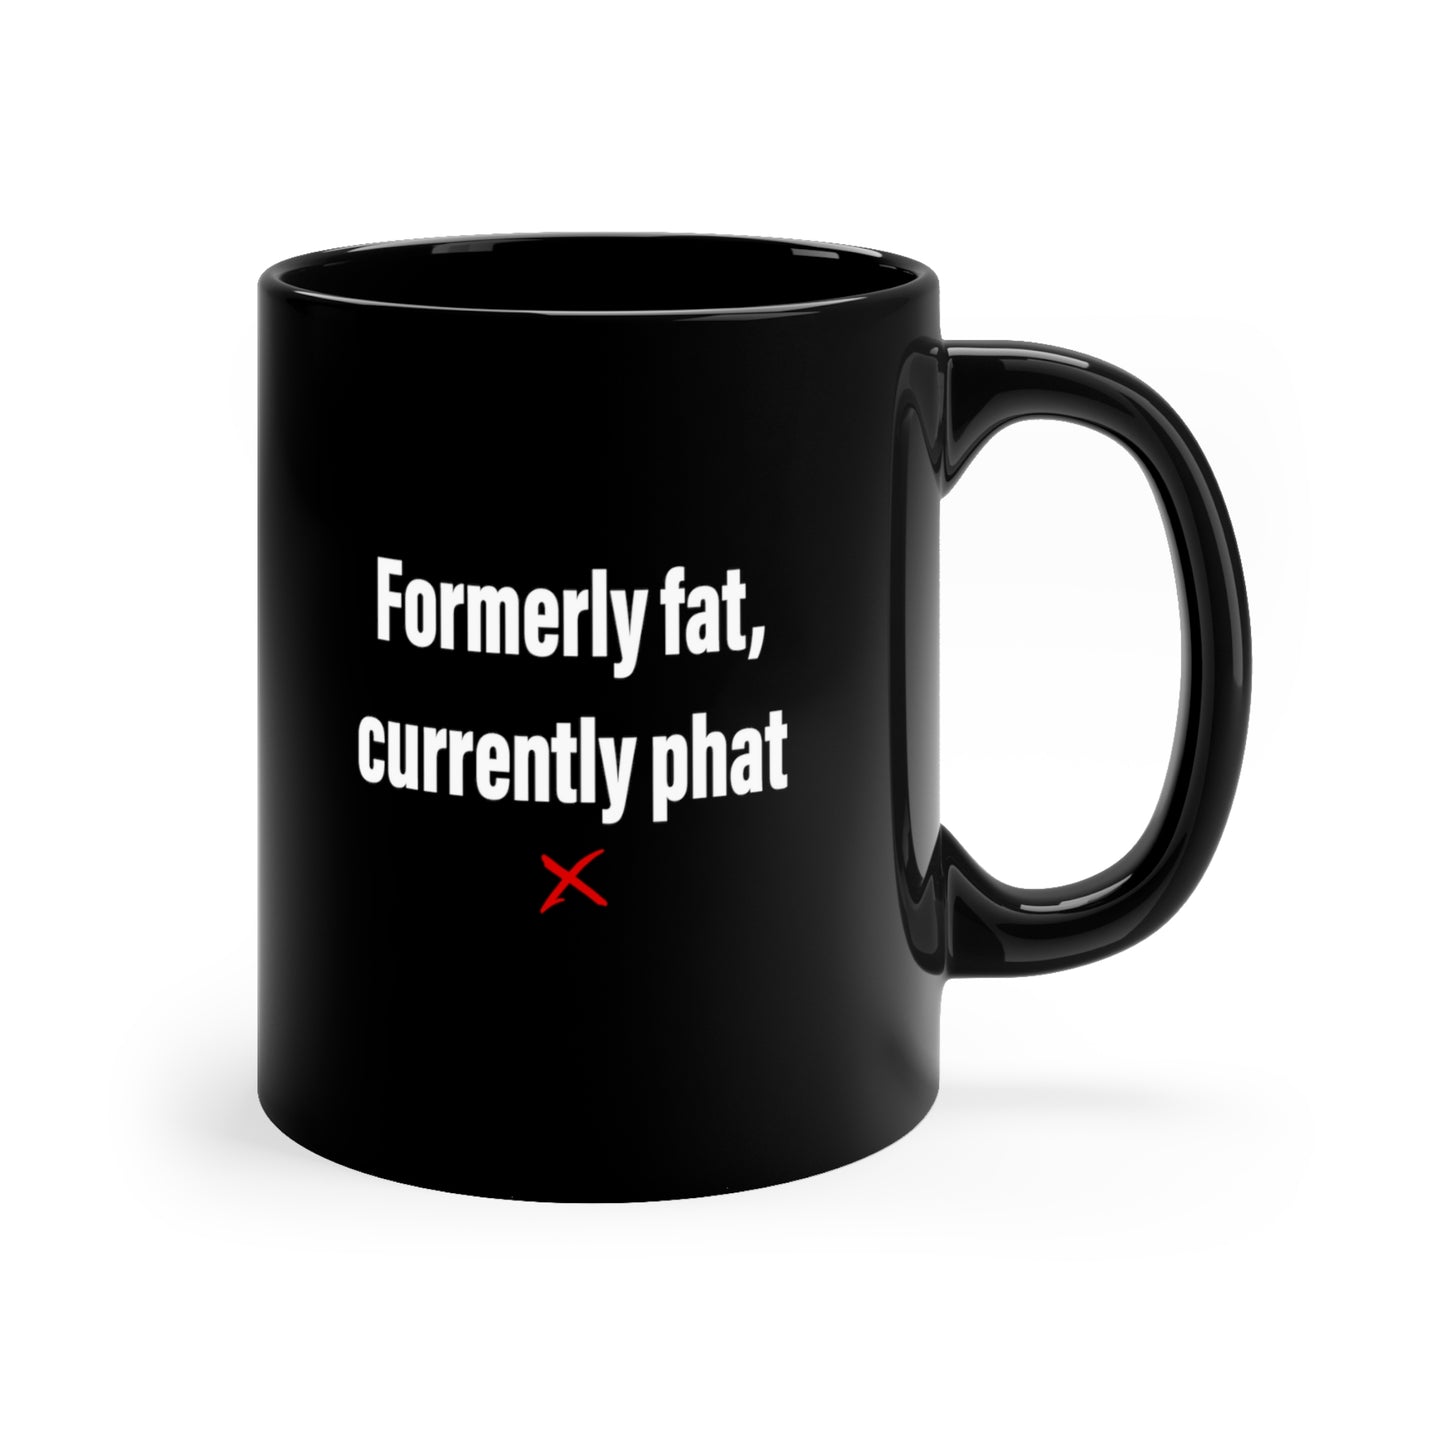 Formerly fat, currently phat - Mug